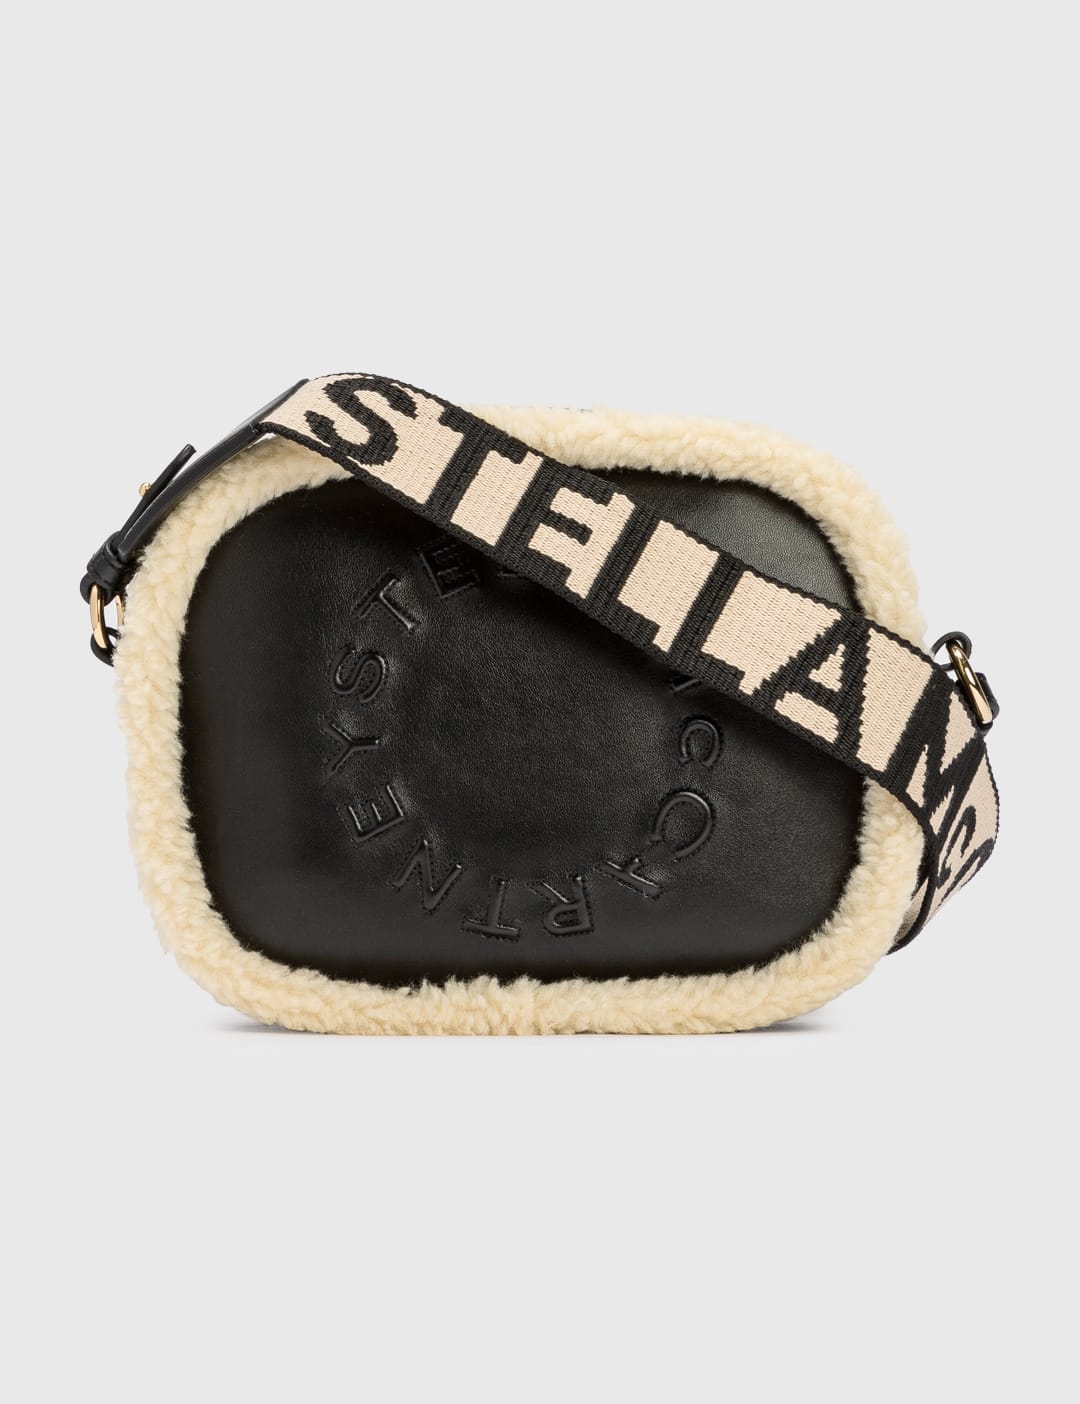 Stella McCartney Small Camera Bag